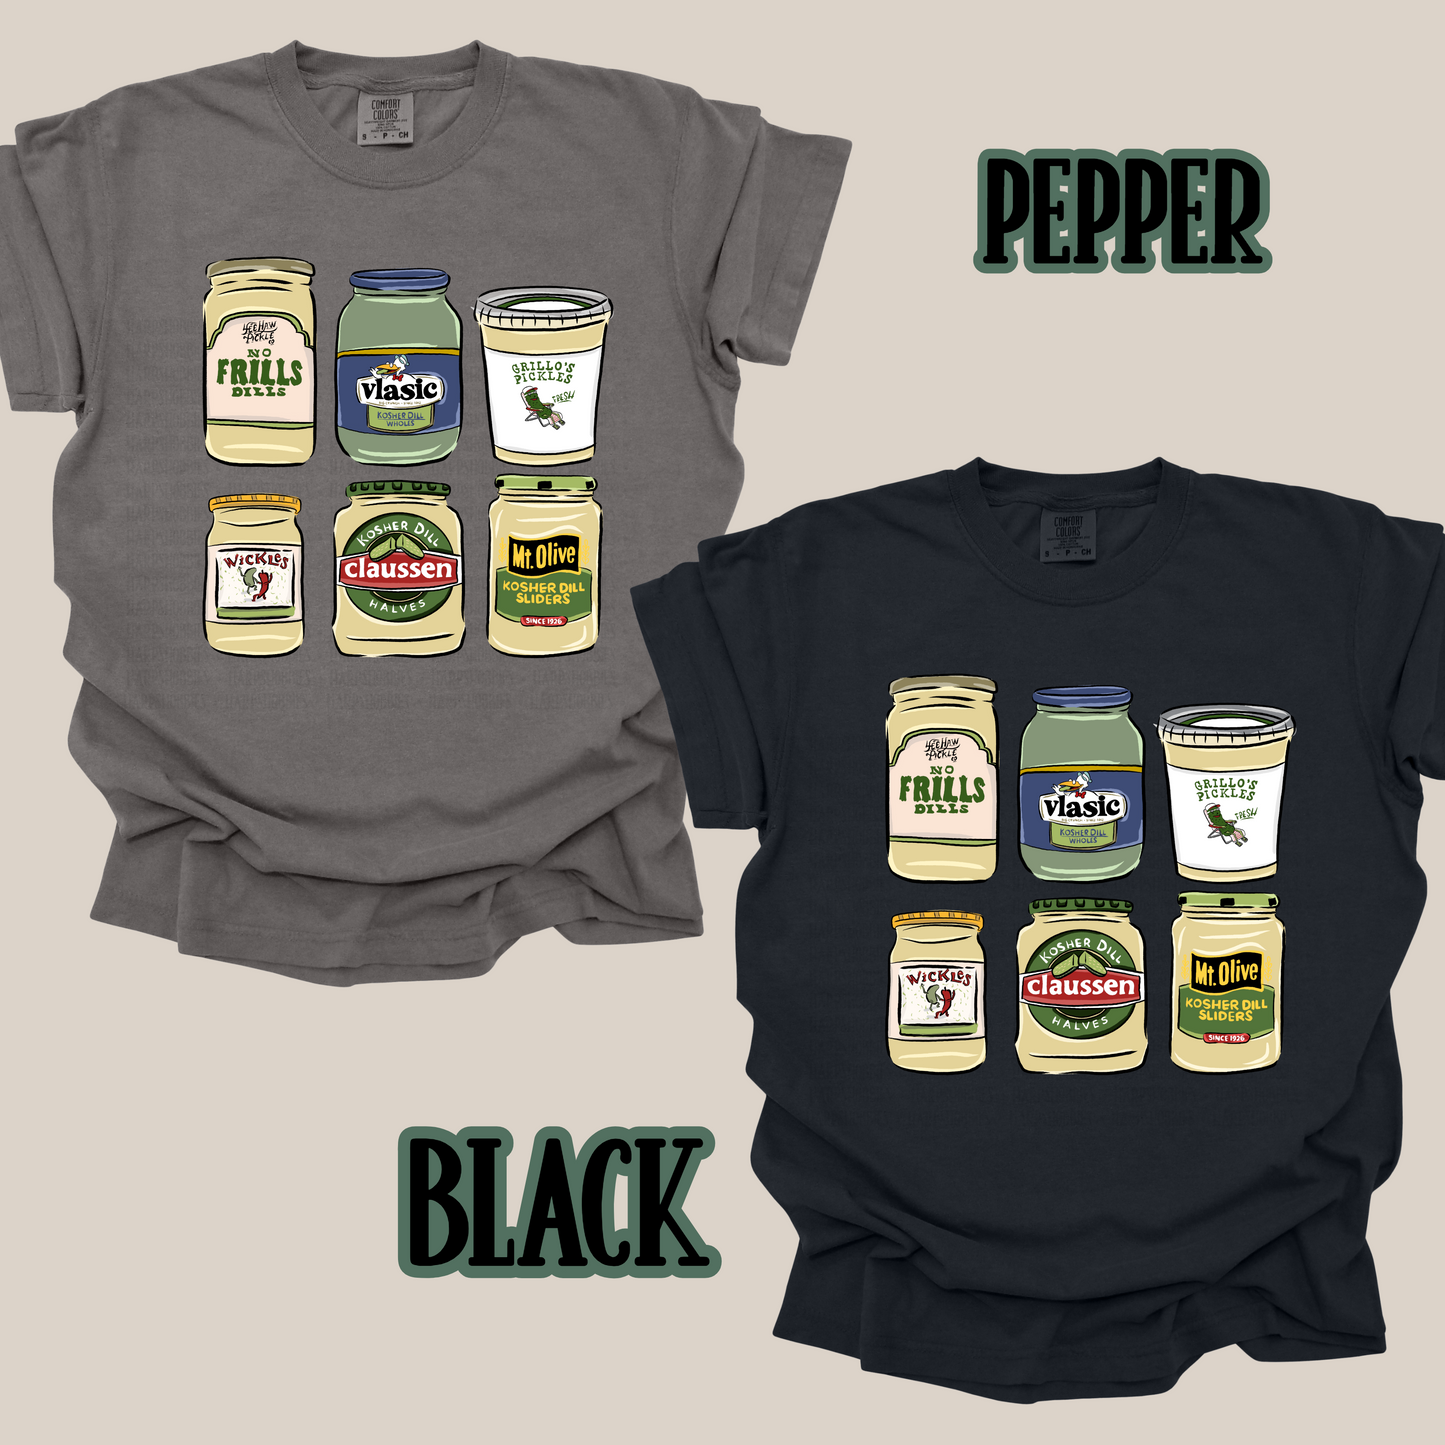 Pickles Tshirt (adult) Comfort Colors